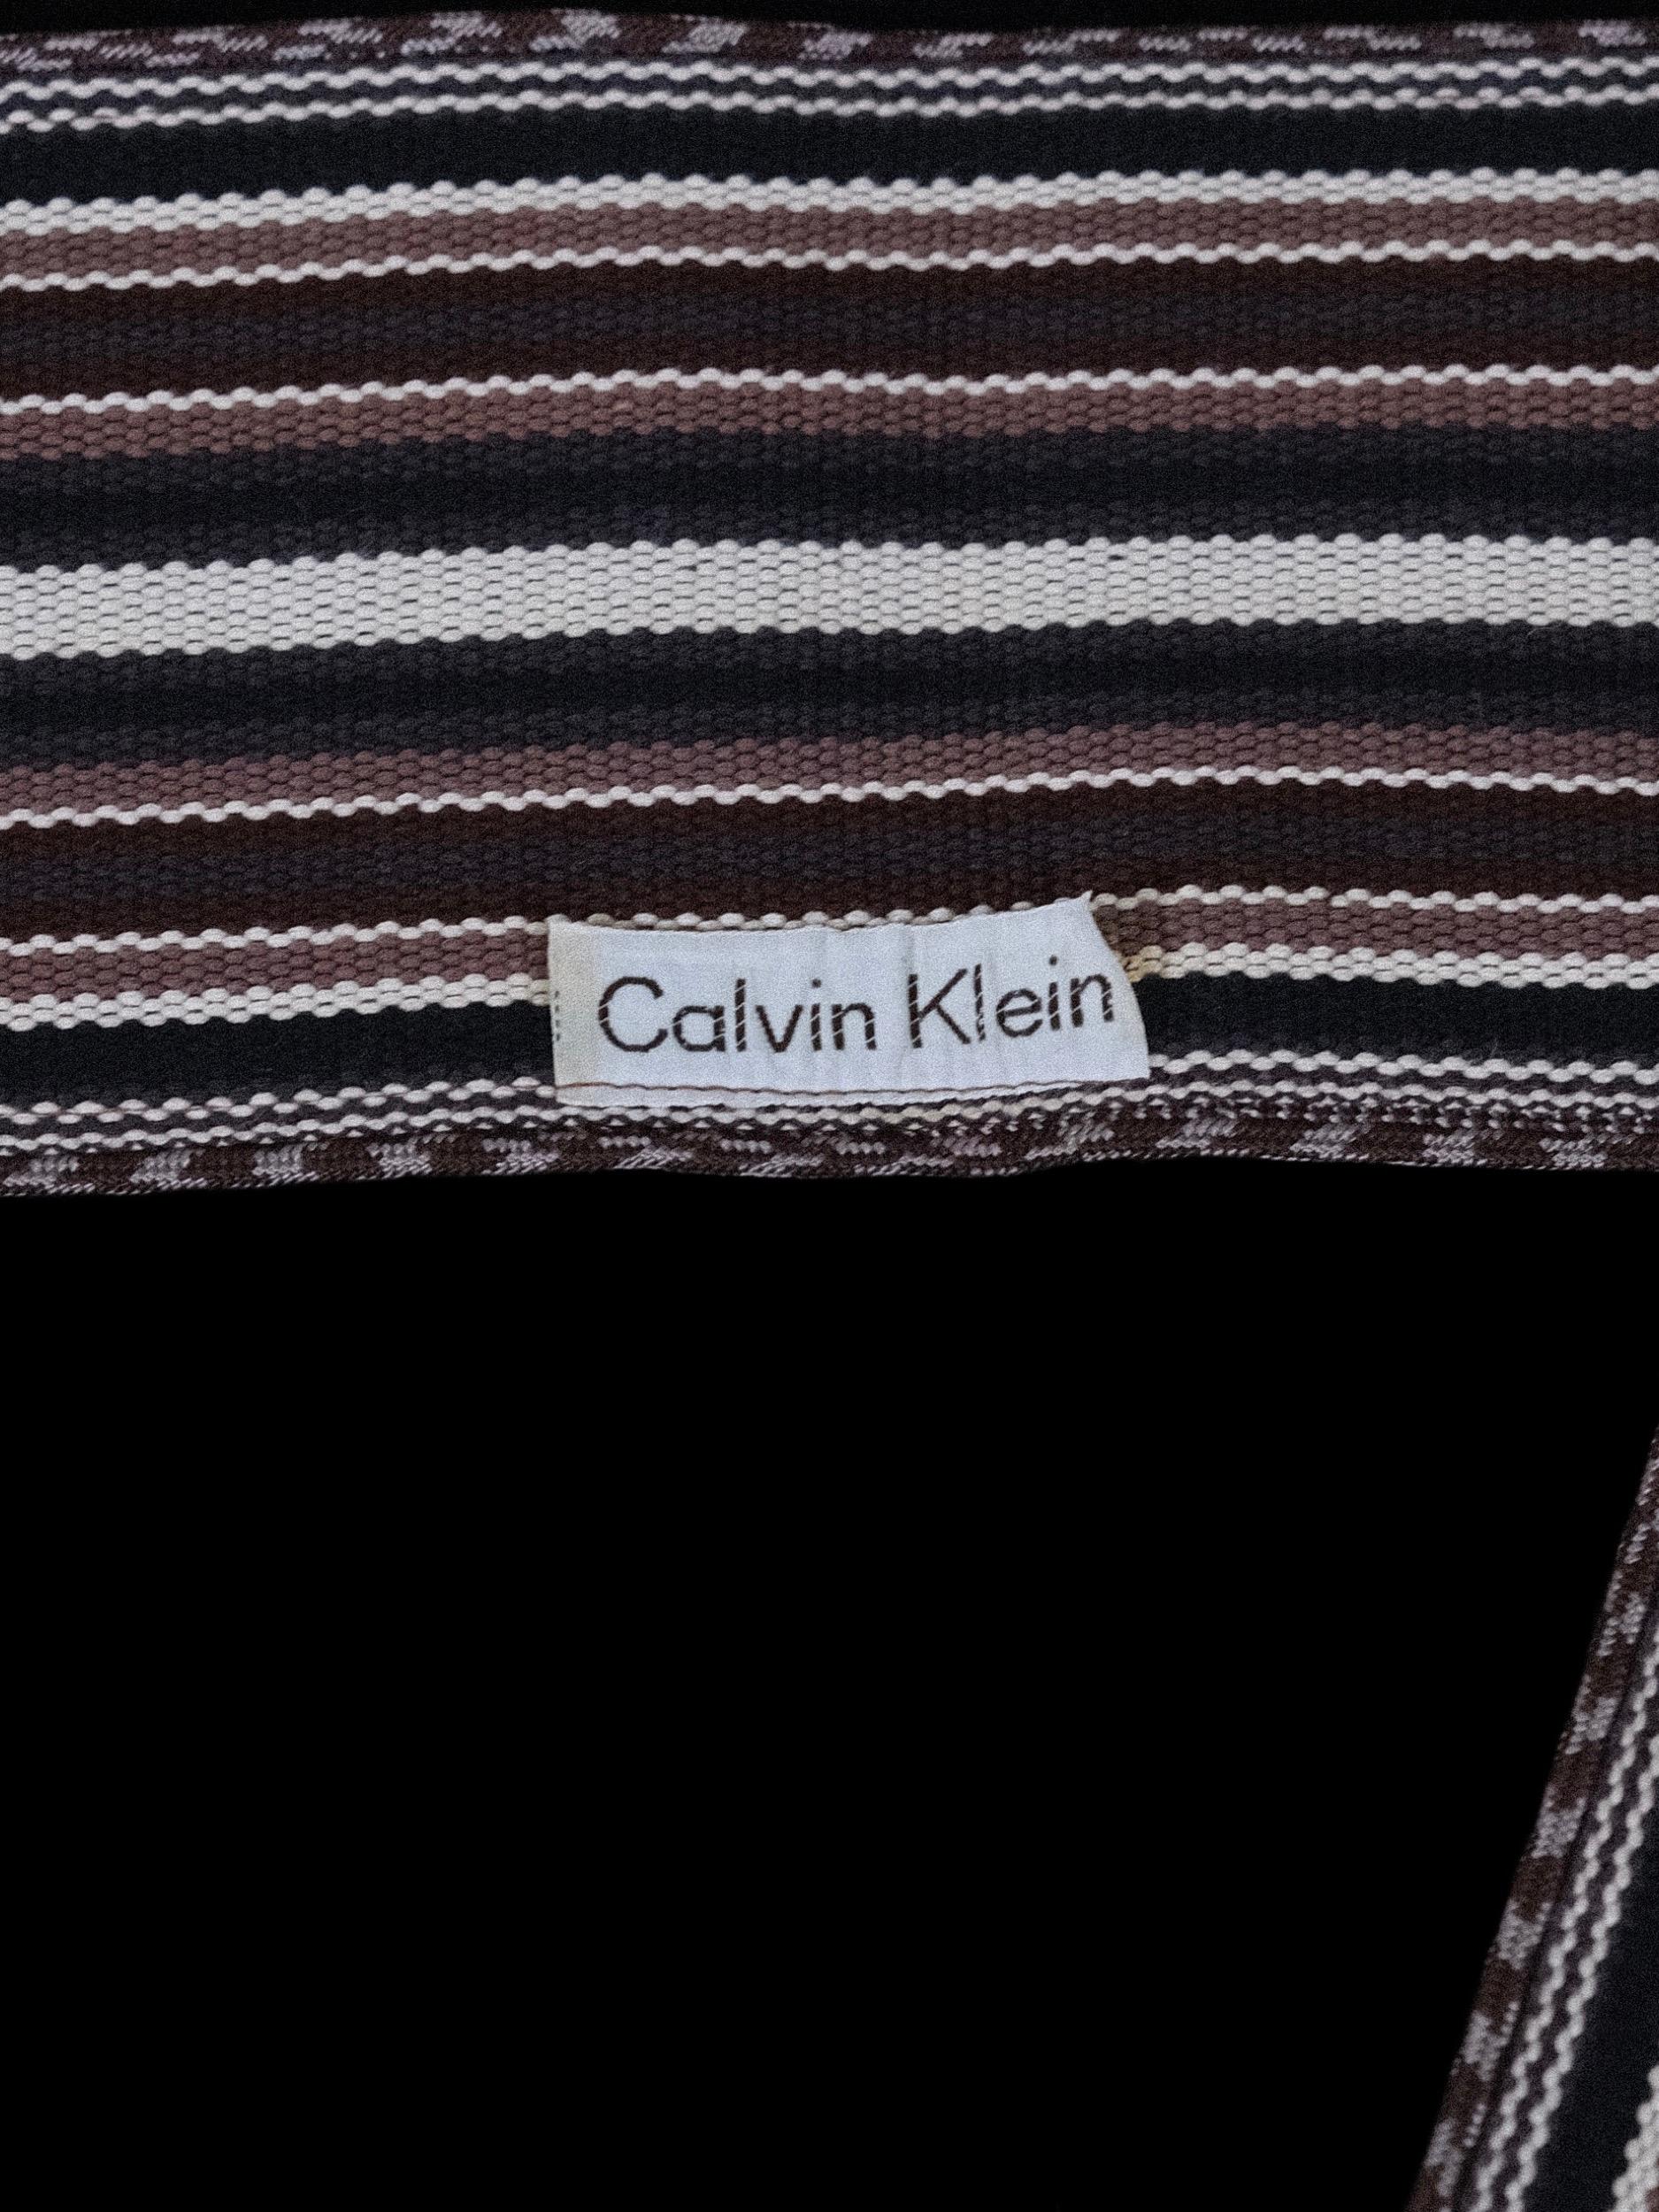 Calvin Klein Spring 1979 Wrap Belt Documented For Sale 6